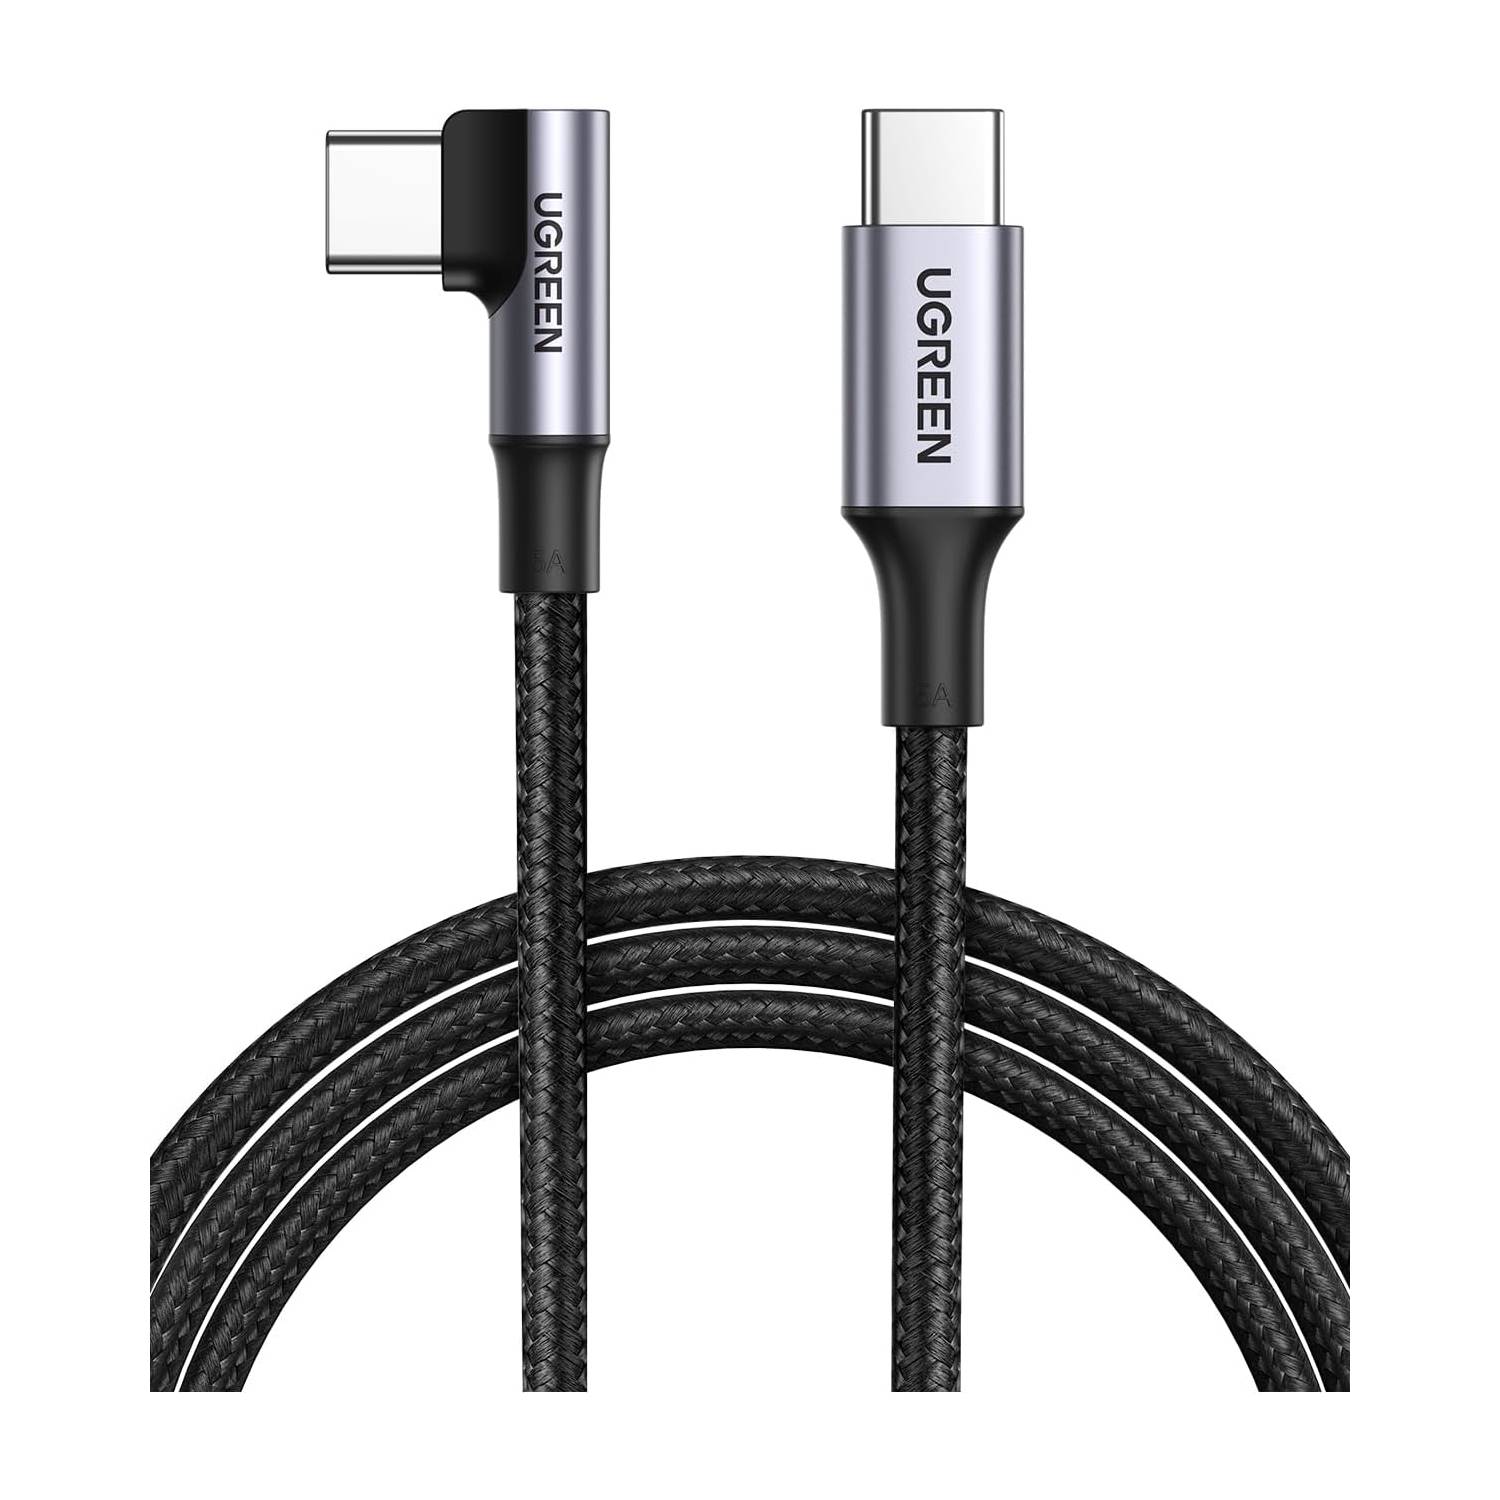 UGREEN Cable USB C a USB A 3.1, 2M Cable Tipo C Carga Rápida